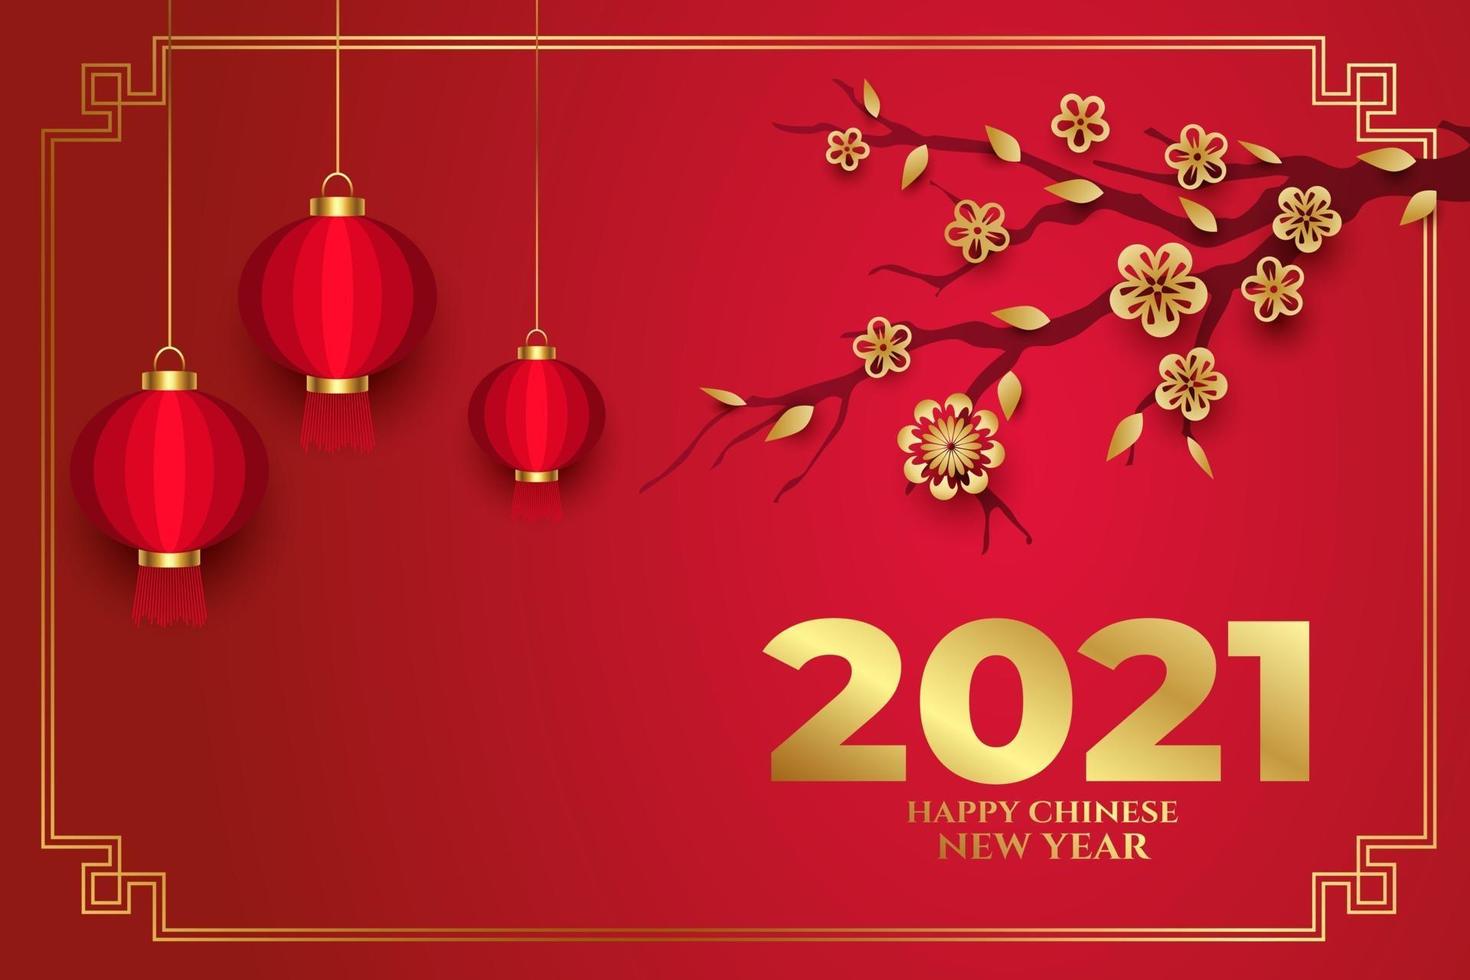 chinees nieuwjaar 2021 gekleurd rood en goud versierd met lantaarns en bloemenbomen vector